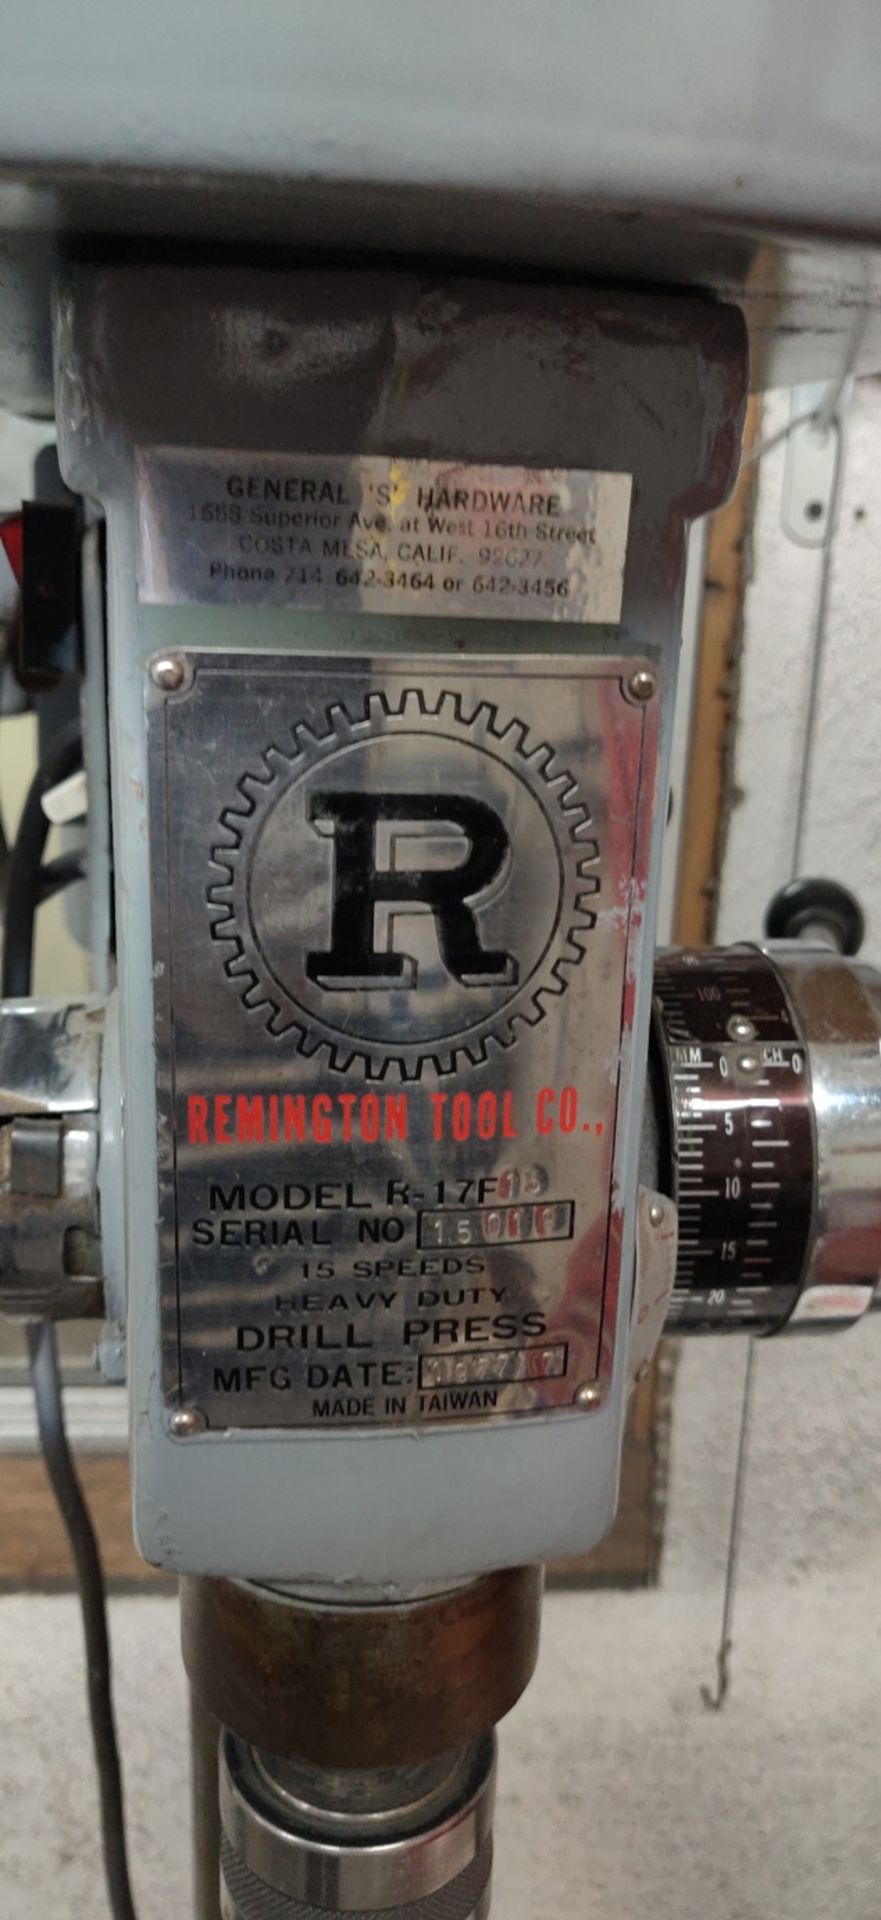 REMINGTON DRILL PRESS 15 SPEED (MODEL: R17F15) - Image 5 of 5